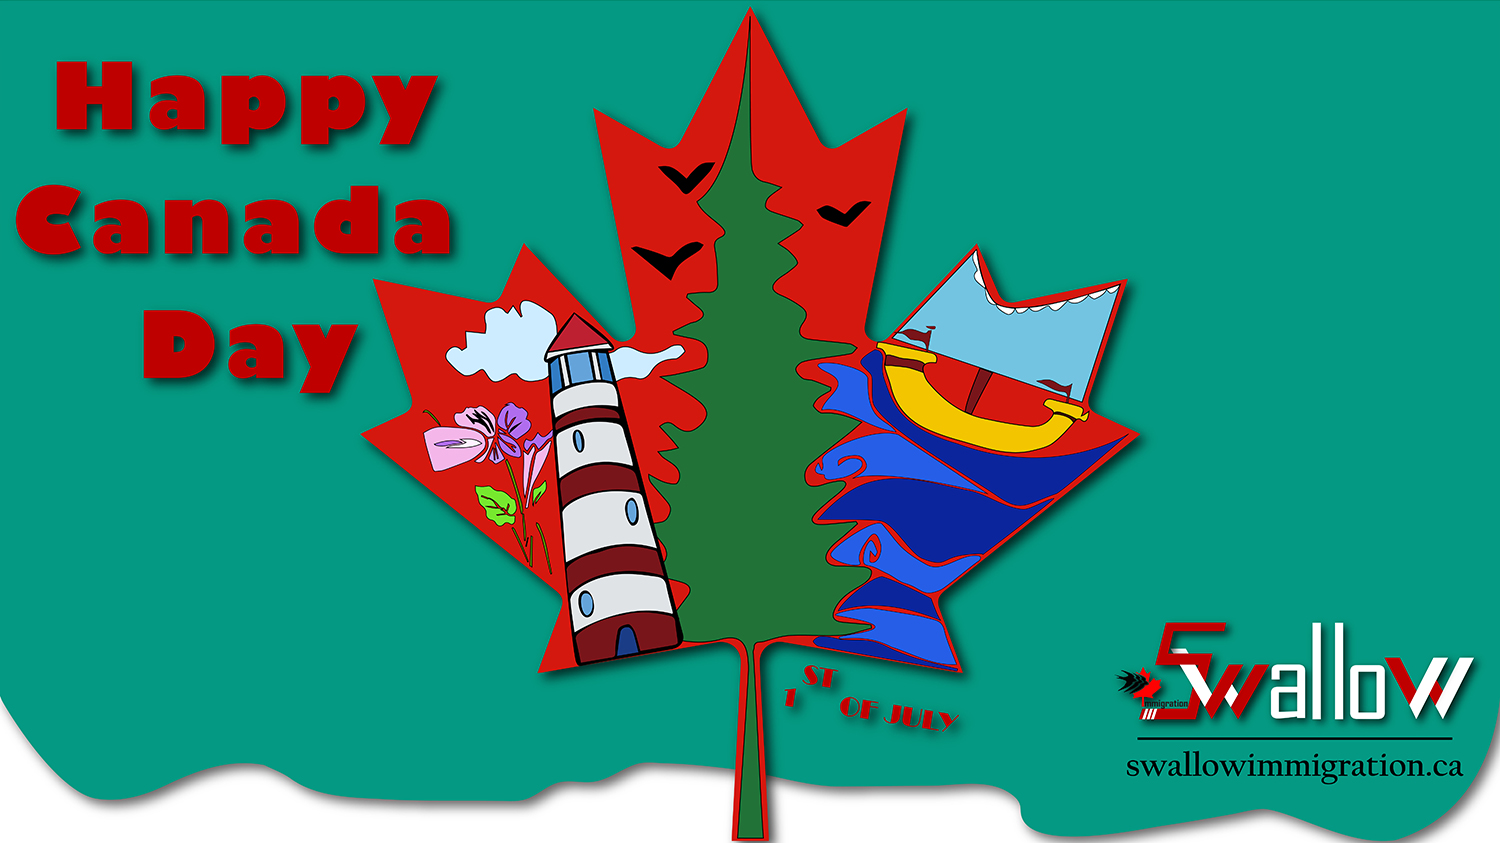 Wishing everyone a joyful and memorable Canada Day! 🍁